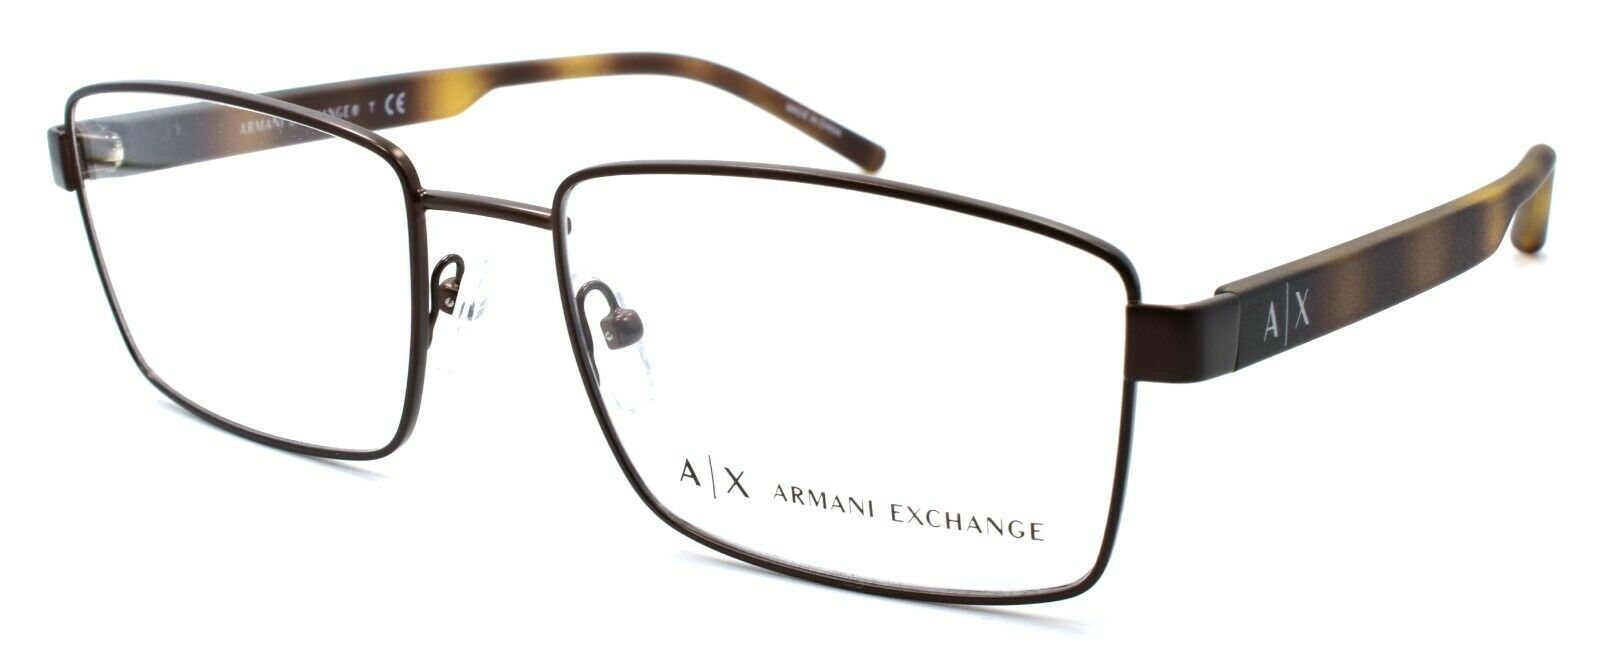 1-Armani Exchange AX1037 6106 Men's Eyeglasses Frames 55-18-145 Matte Brown-8056597035101-IKSpecs